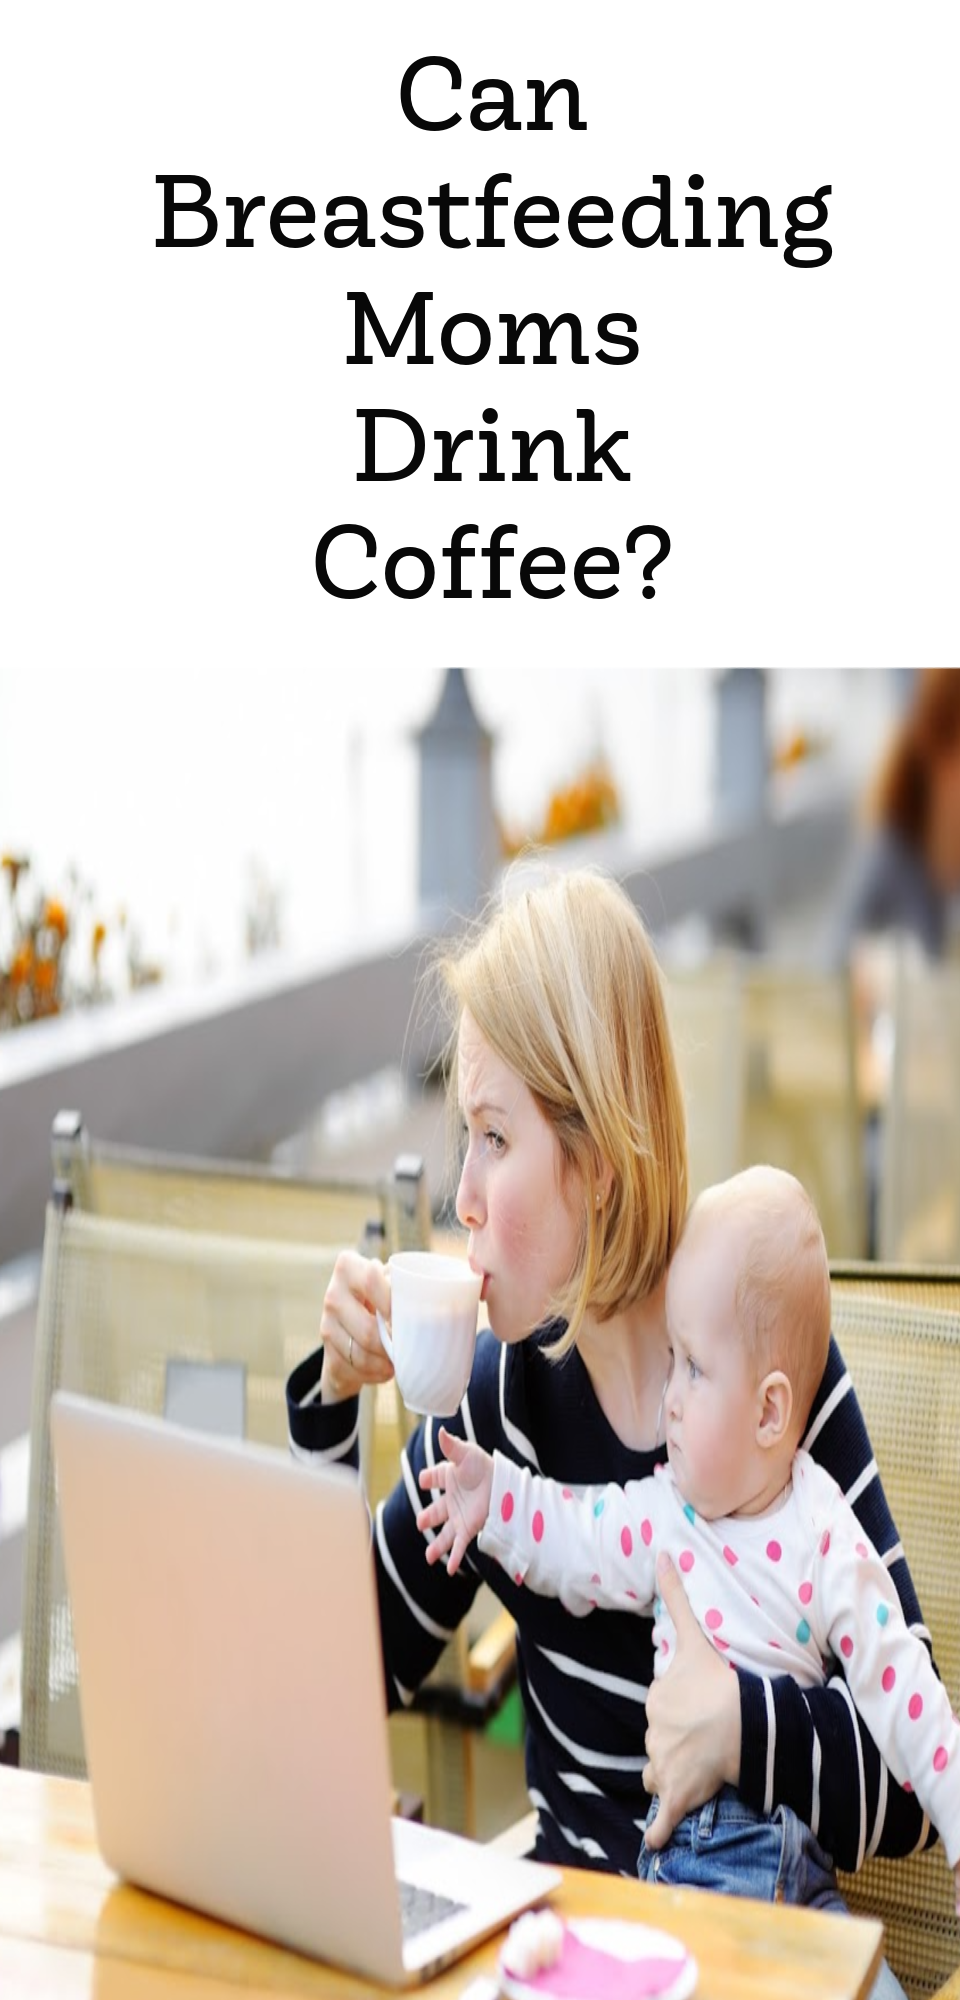 Can Breastfeeding Moms Drink Coffee?